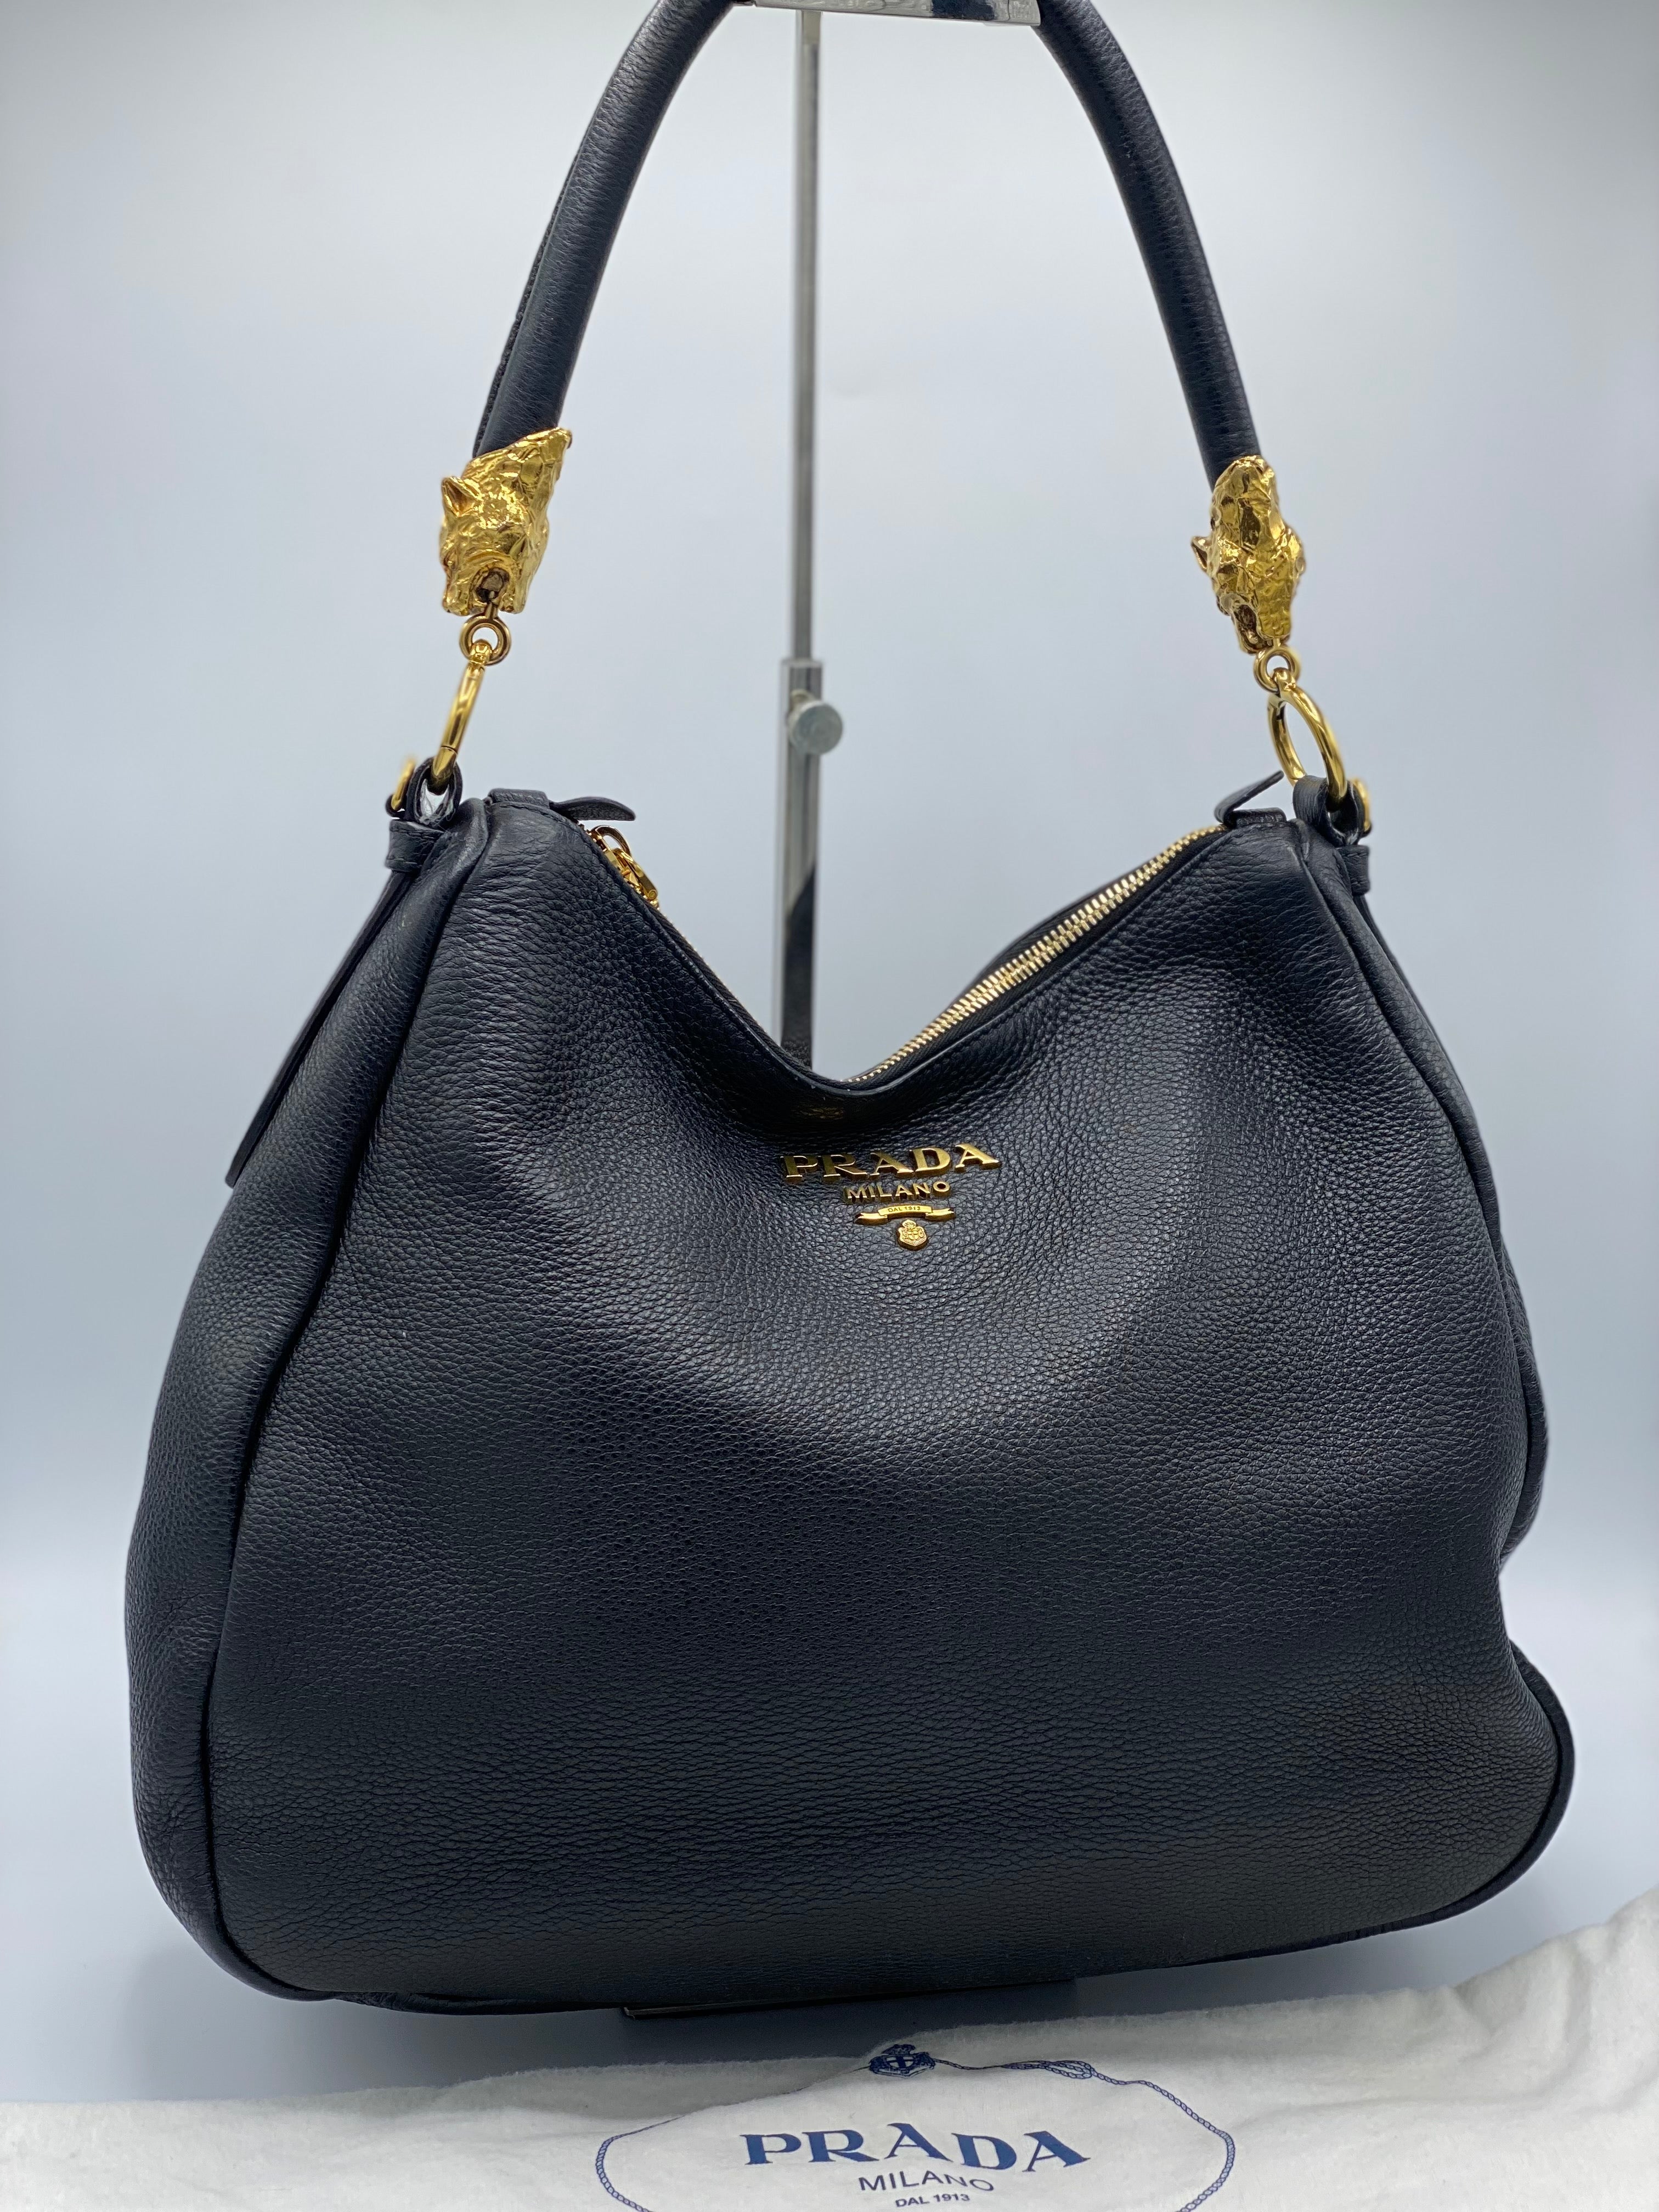 Cartera Prada Zip Handbag – The New Black